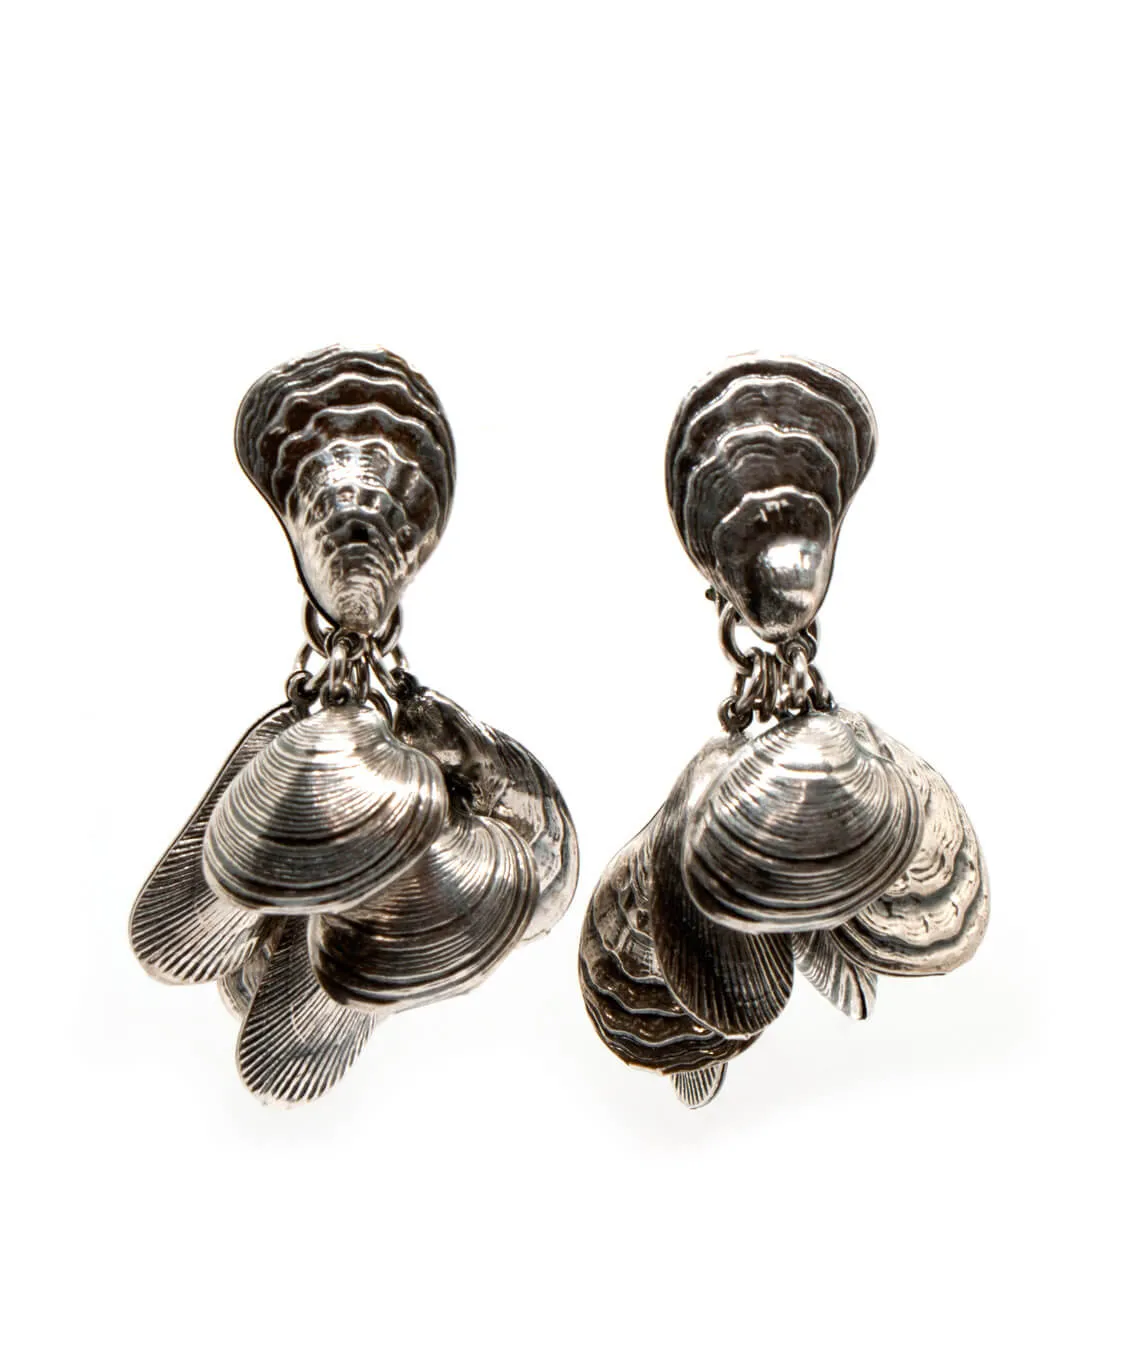 Vintage Napier shell clip-on earrings